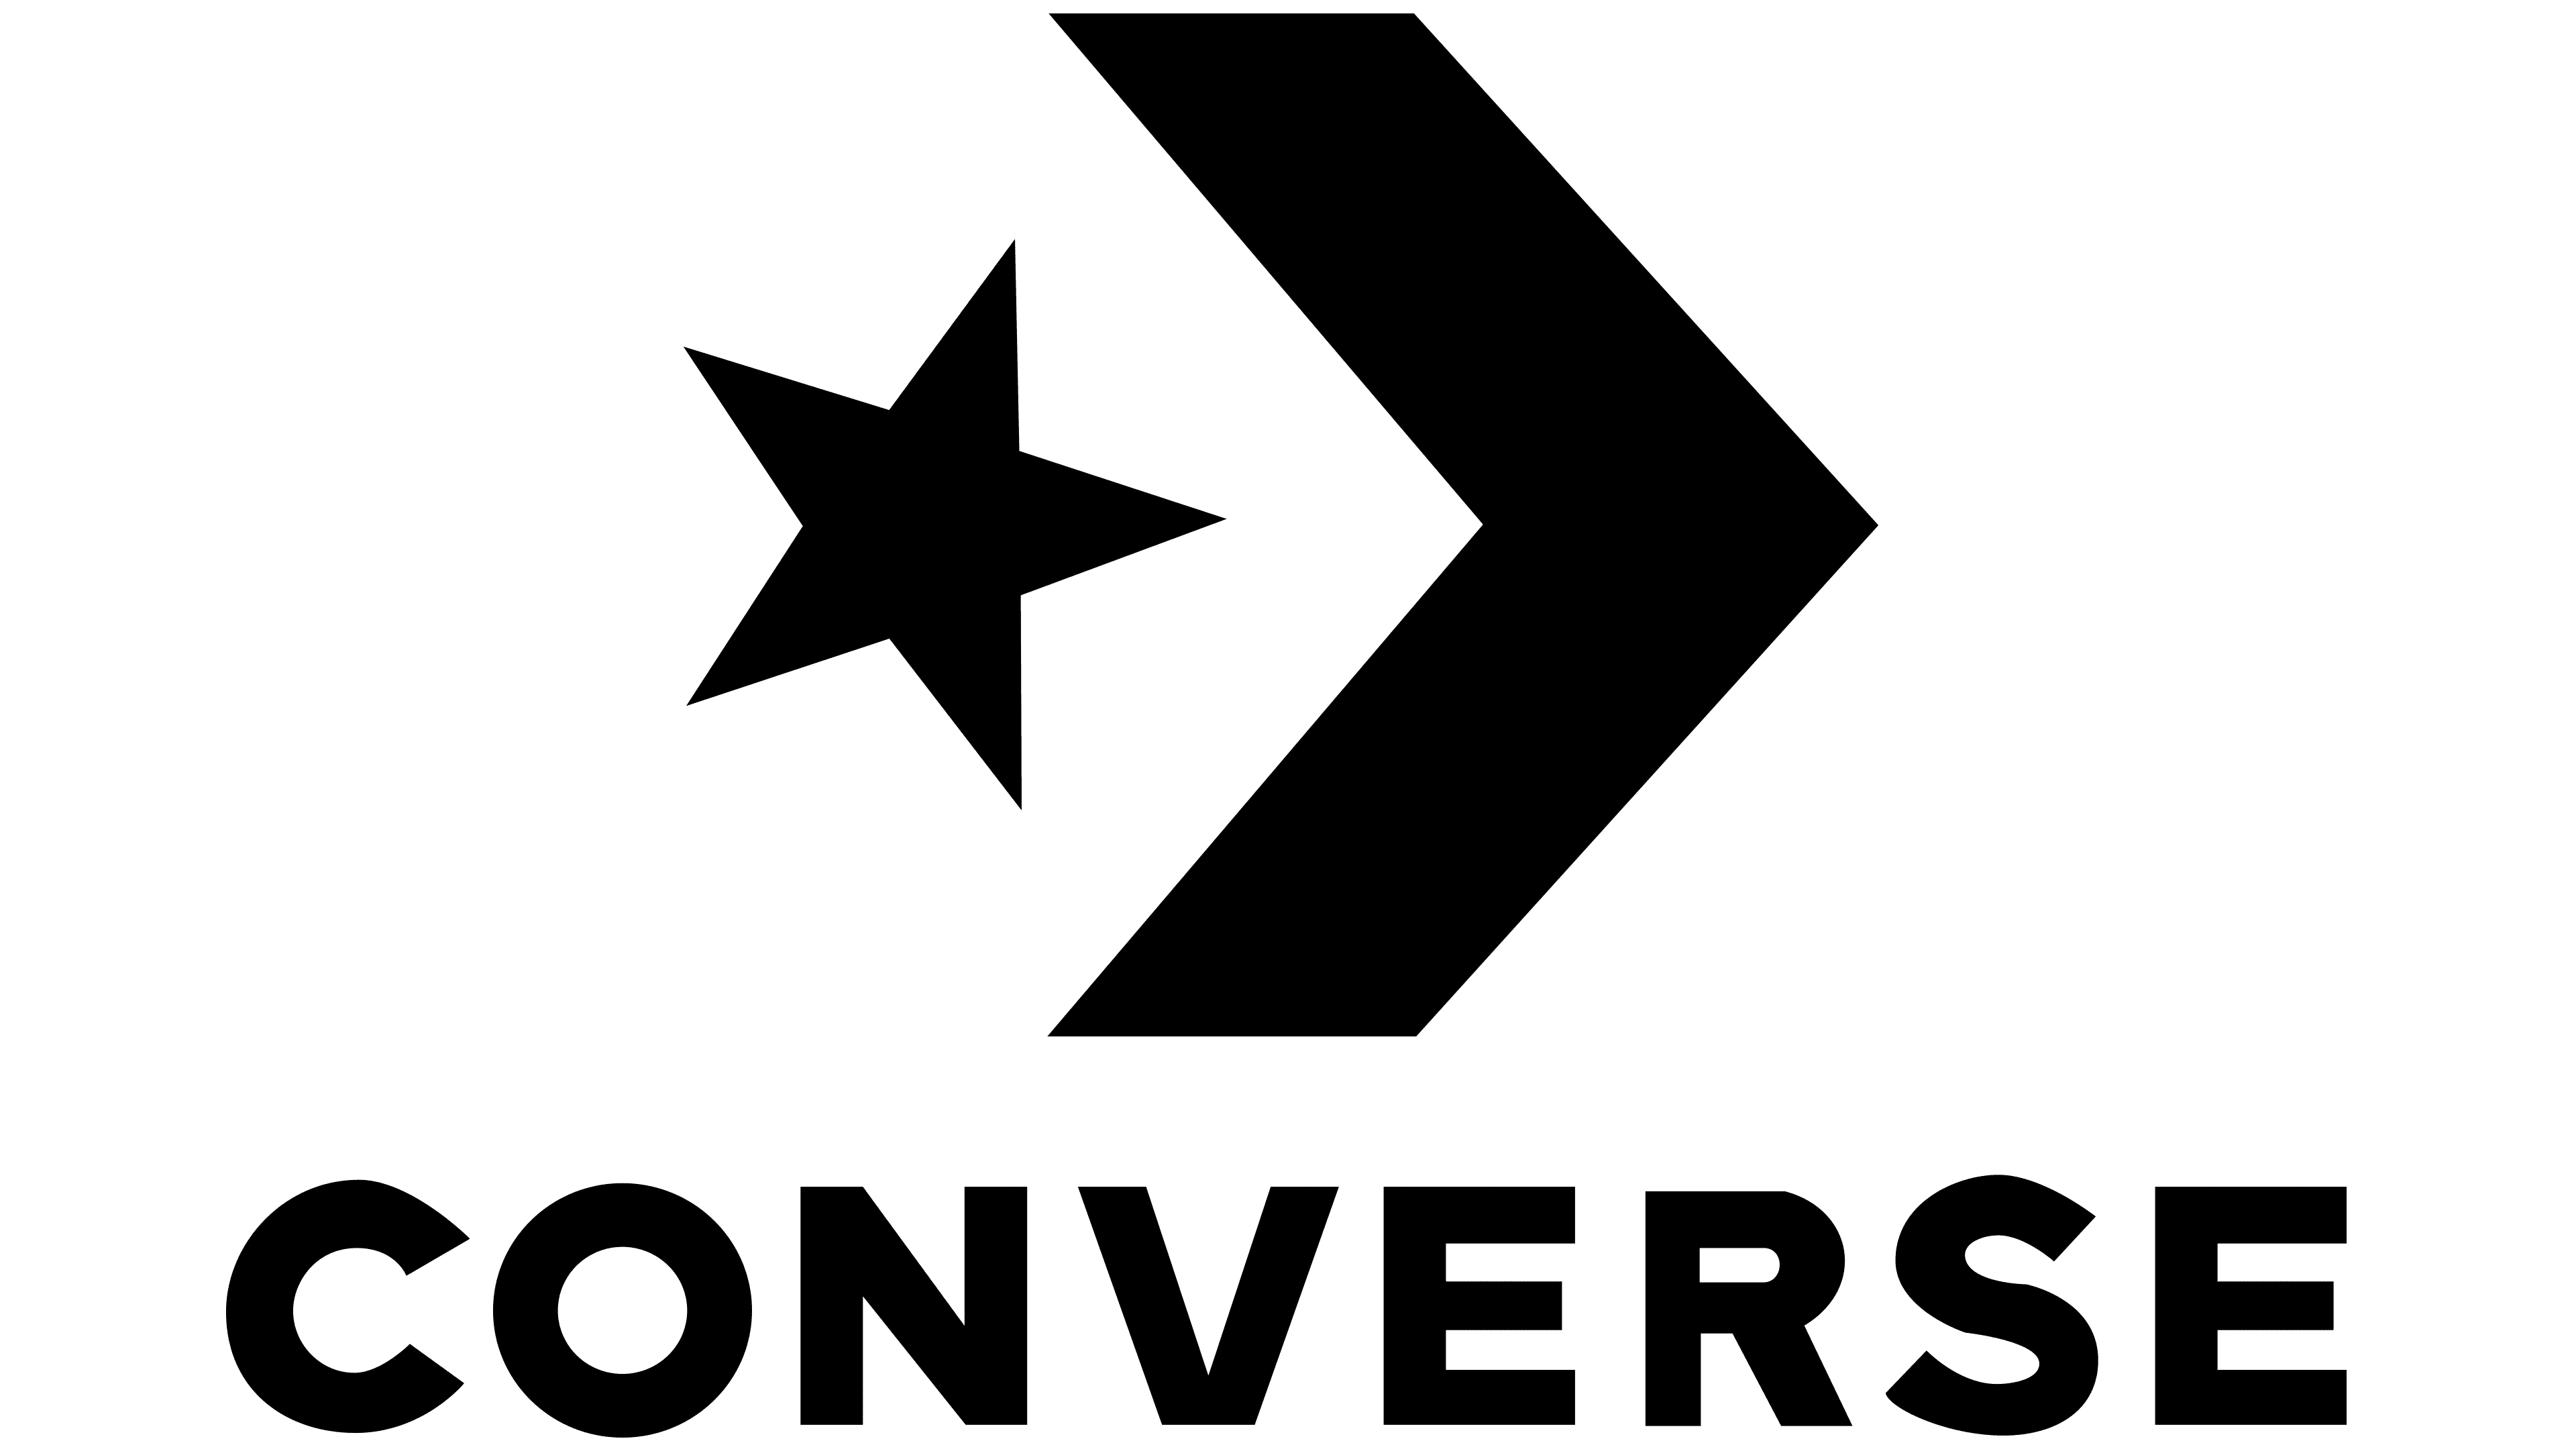 converse logo size